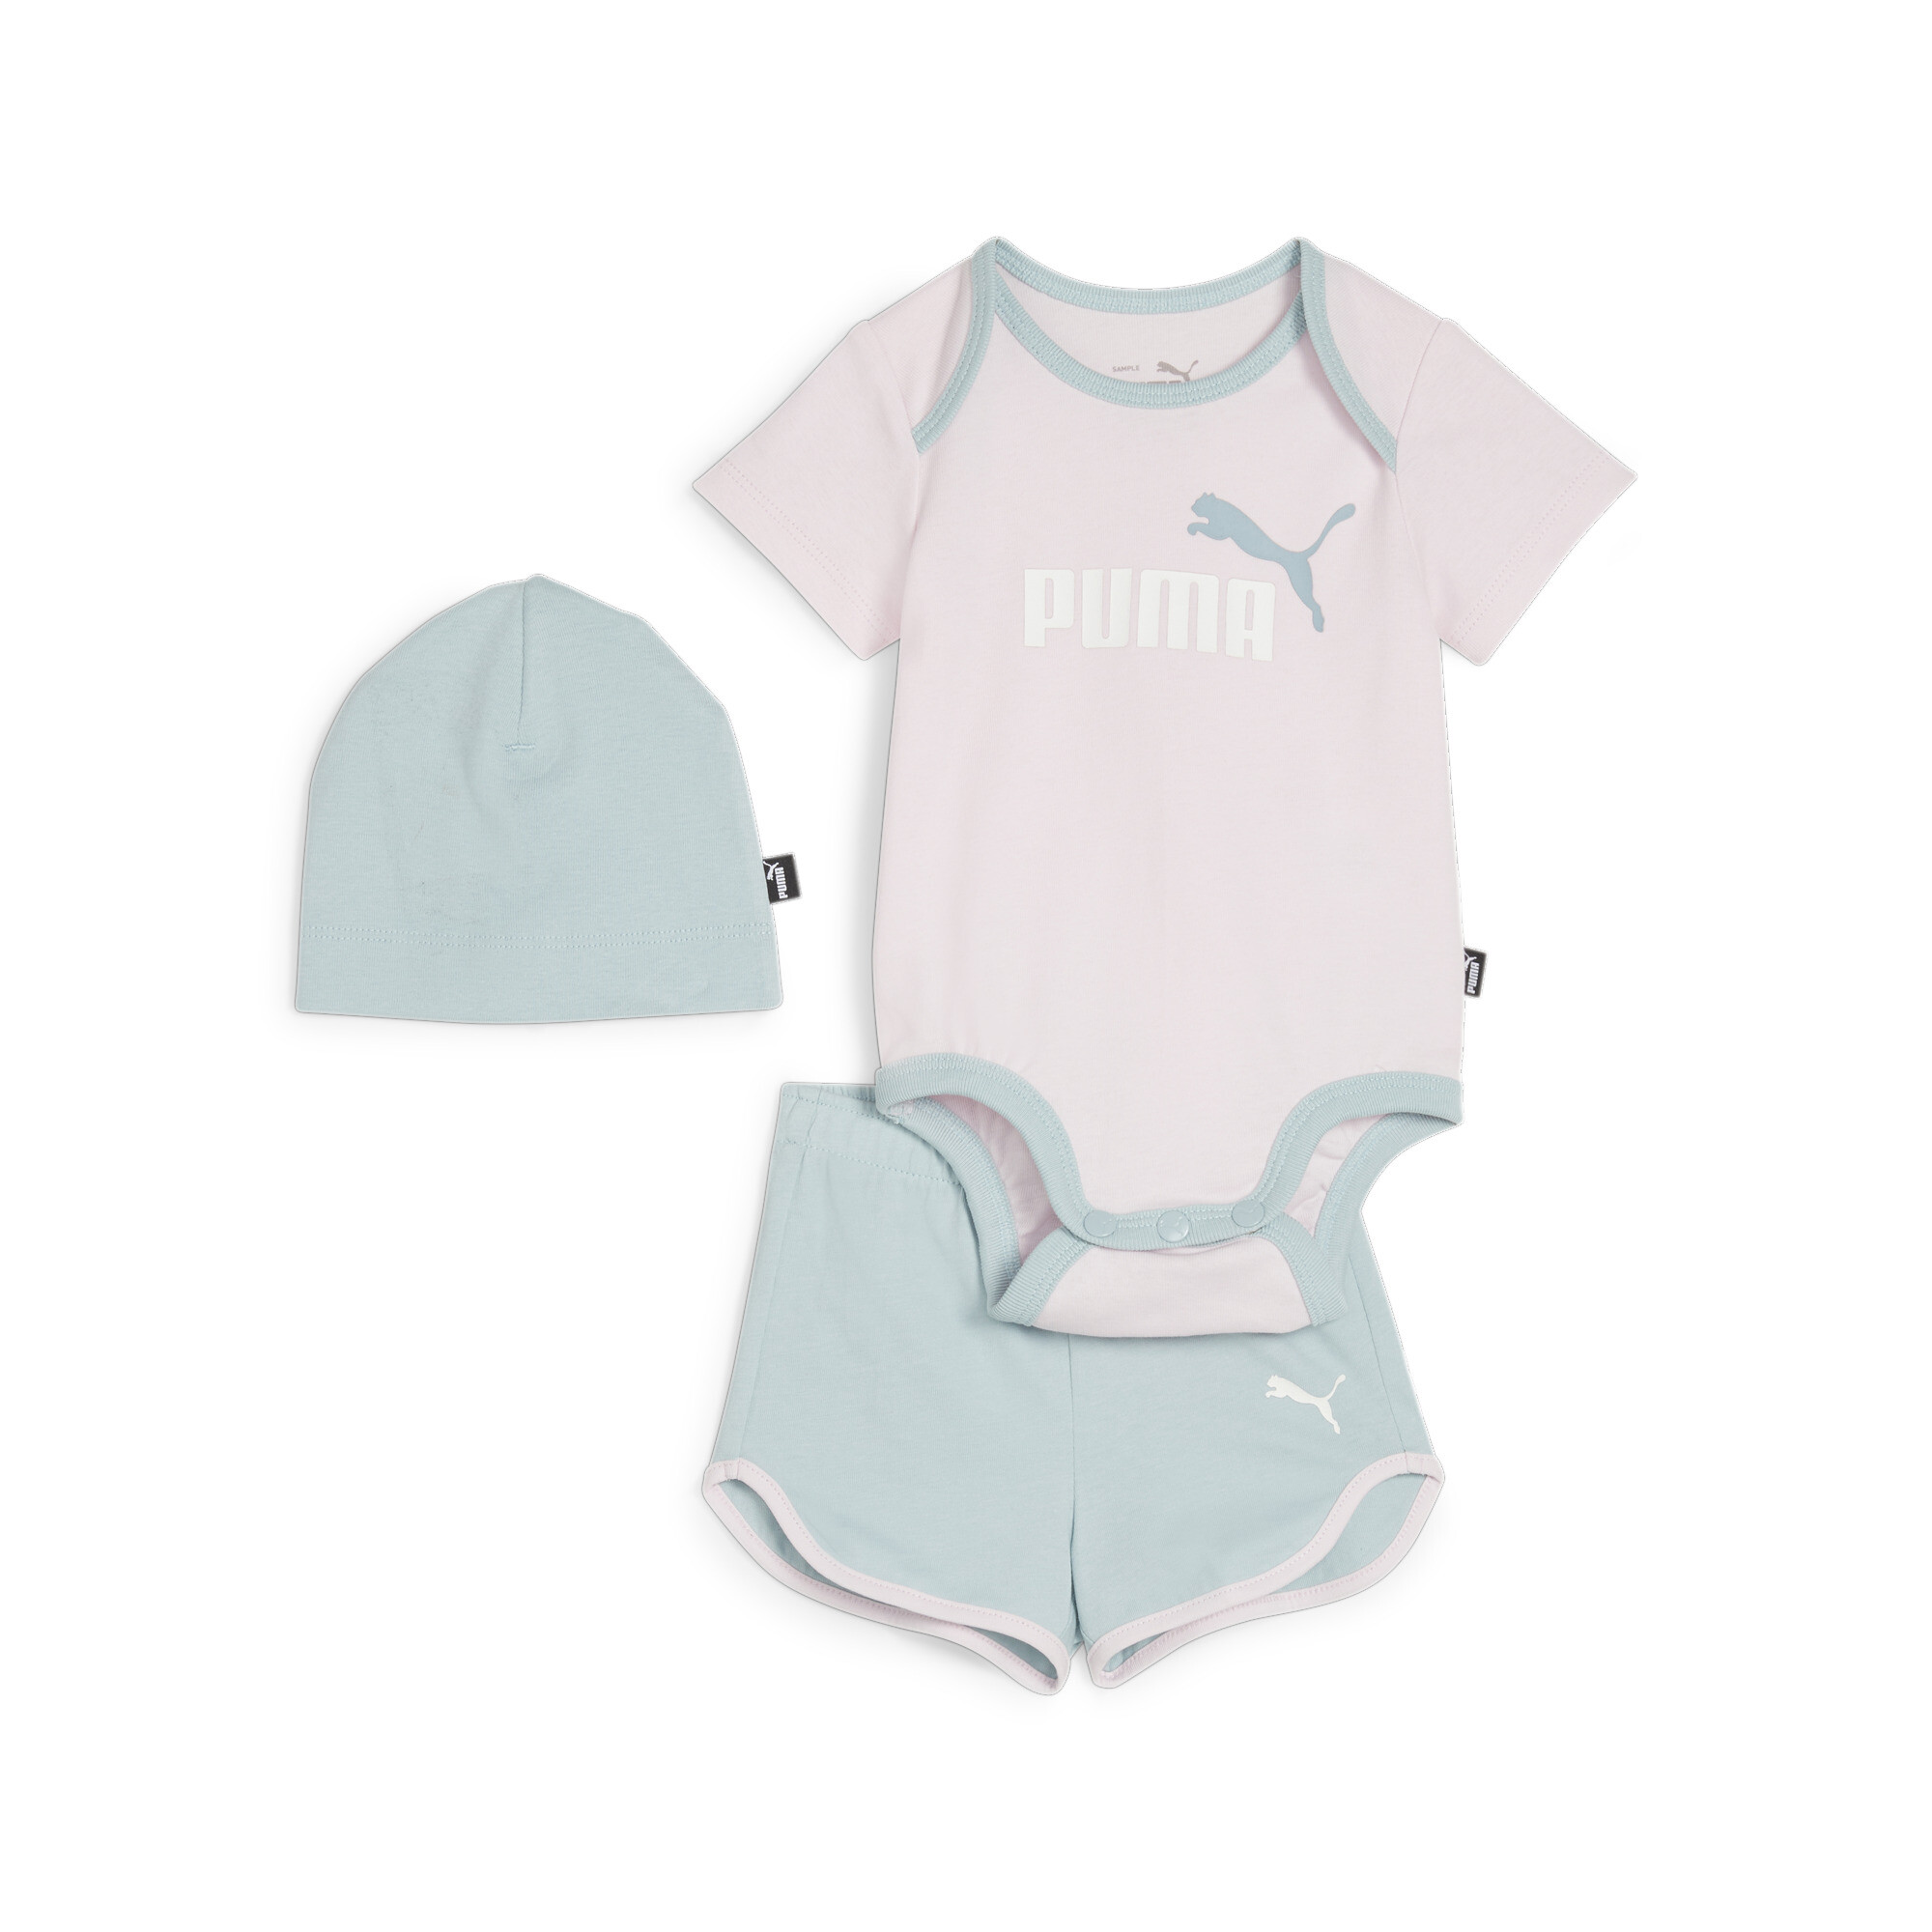 Puma Minicats Beanie Hat Newborn Set Baby, Pink, Size 2-4M, Clothing